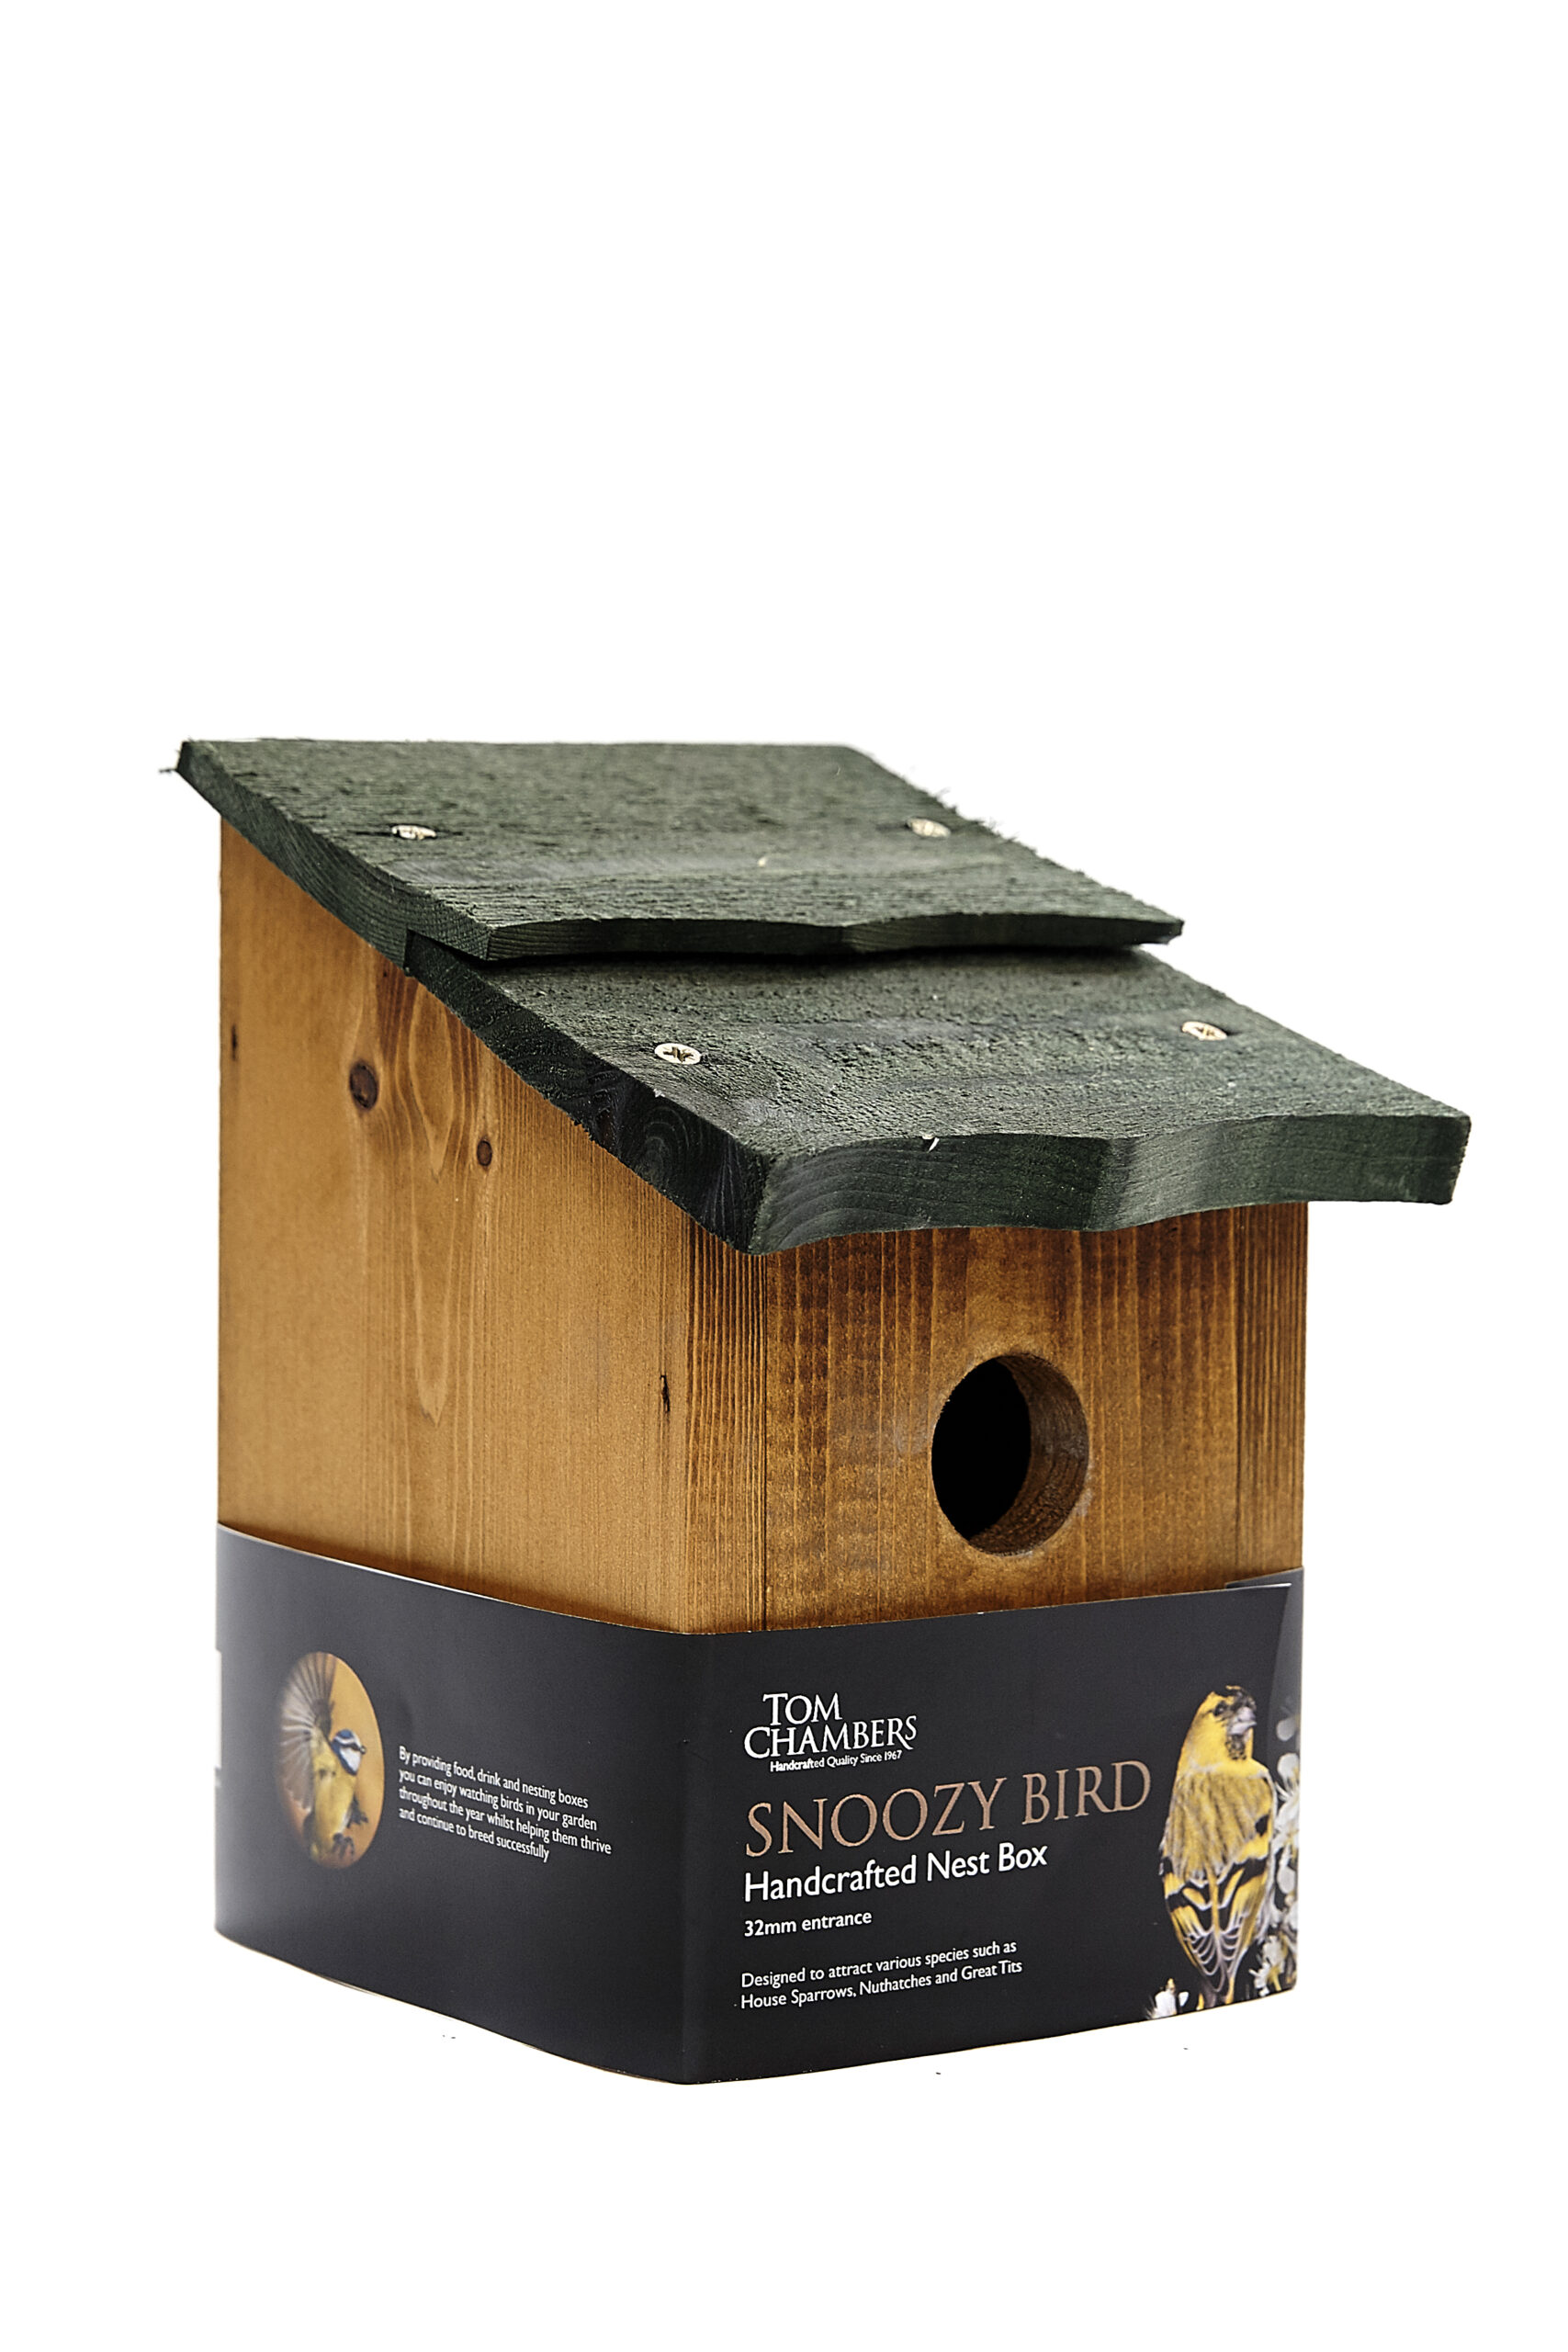 Tom chambers Snoozy Bird Nest Box 